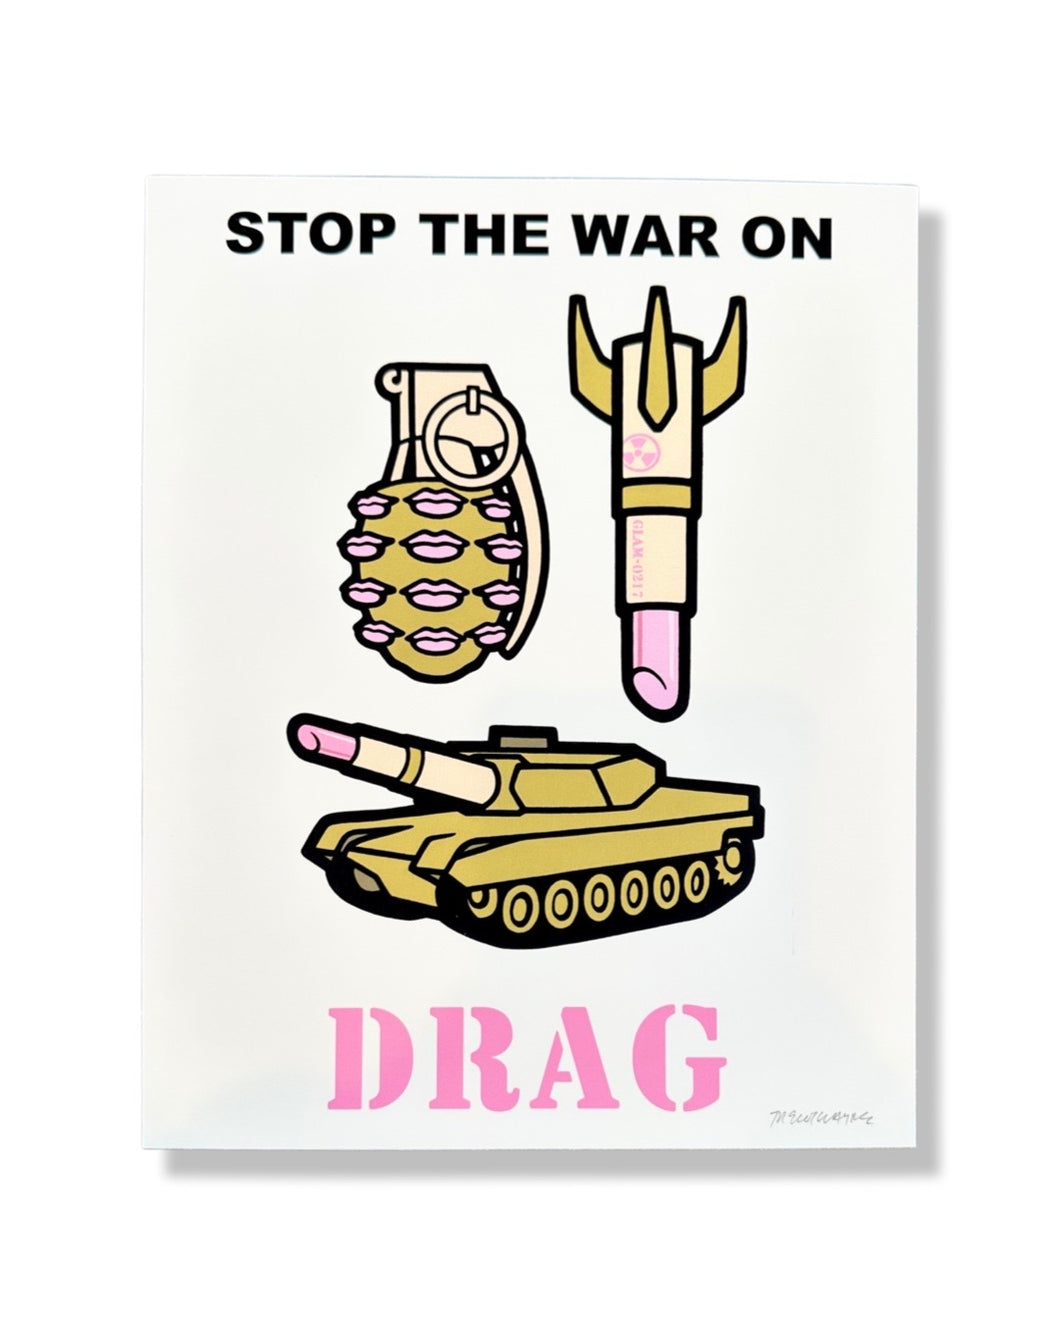 Trevor Wayne Limited Edition Stop the War on Drag Print